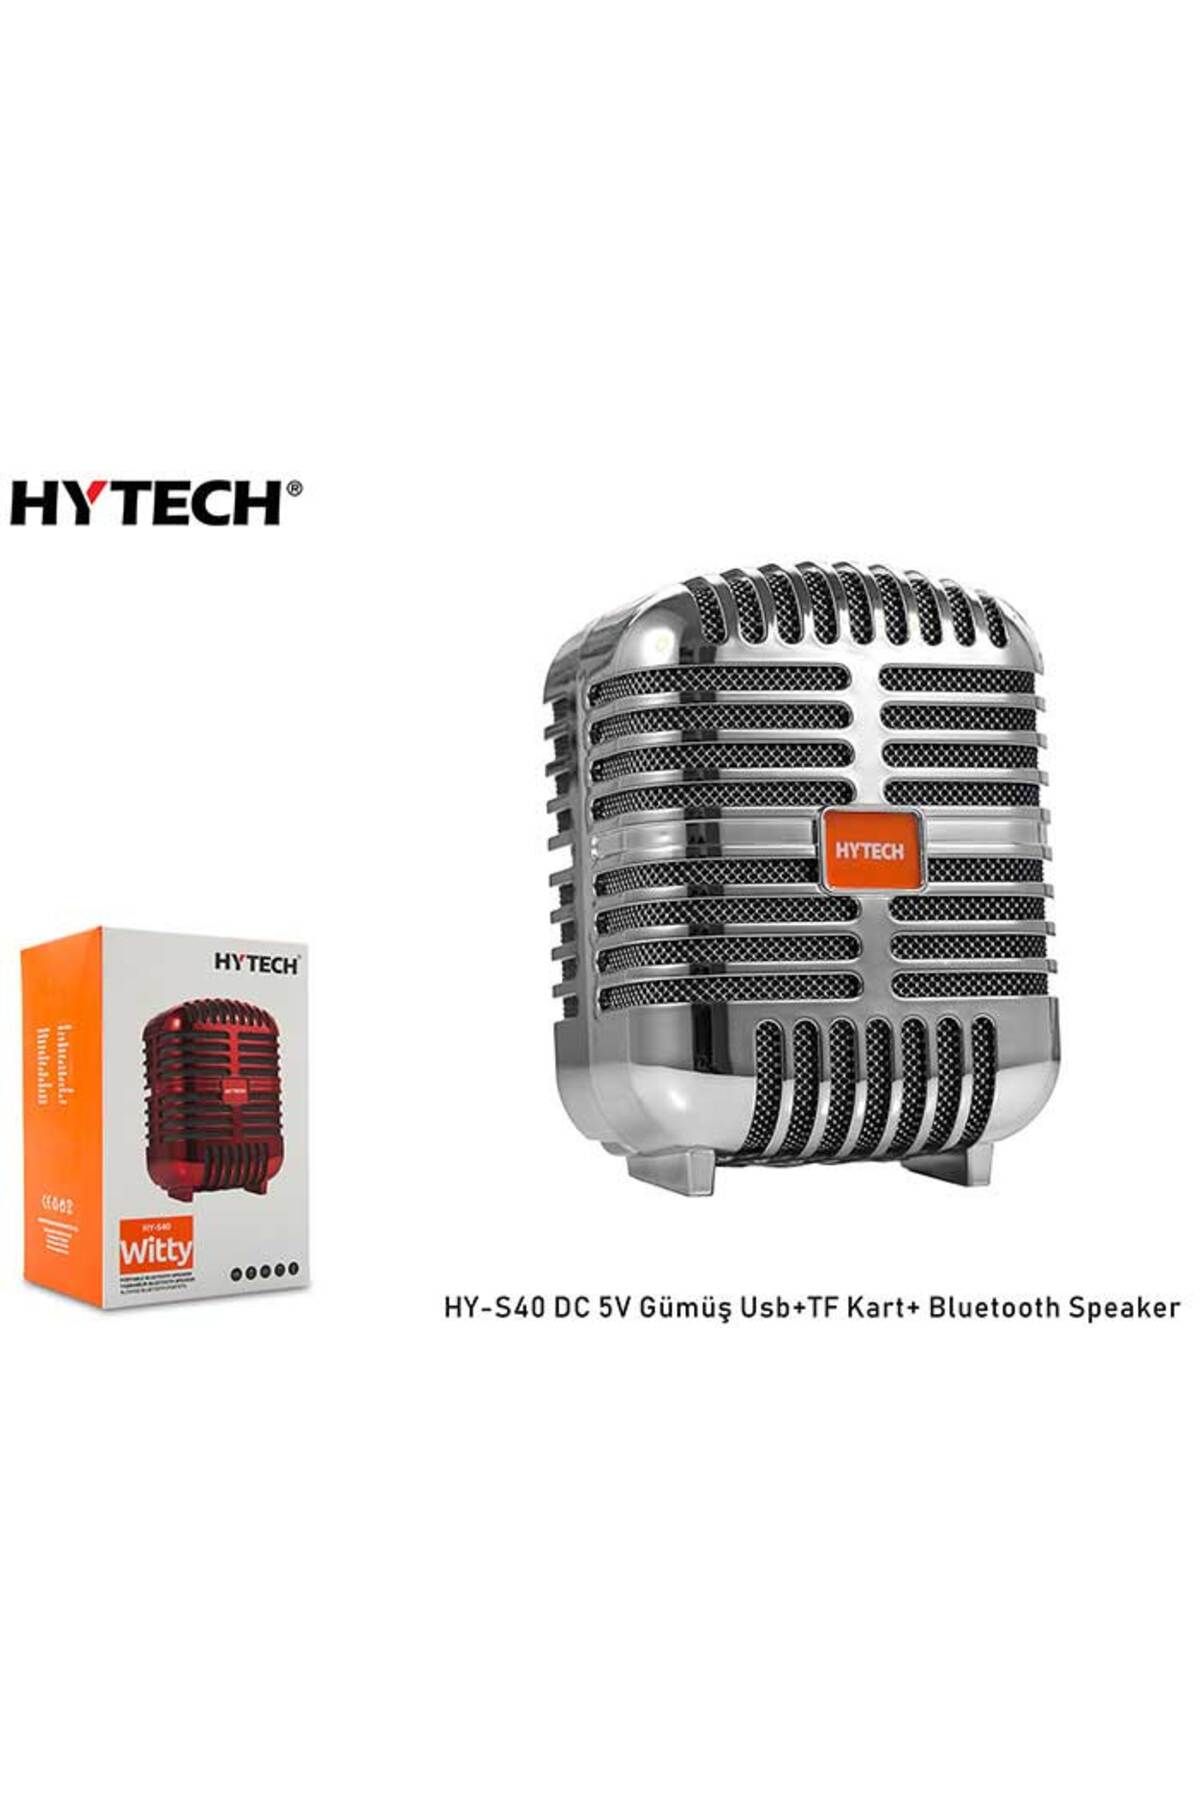 Hytech HY-S40 DC 5V Bluetooth Speaker Gümüş Usb+TF Kart